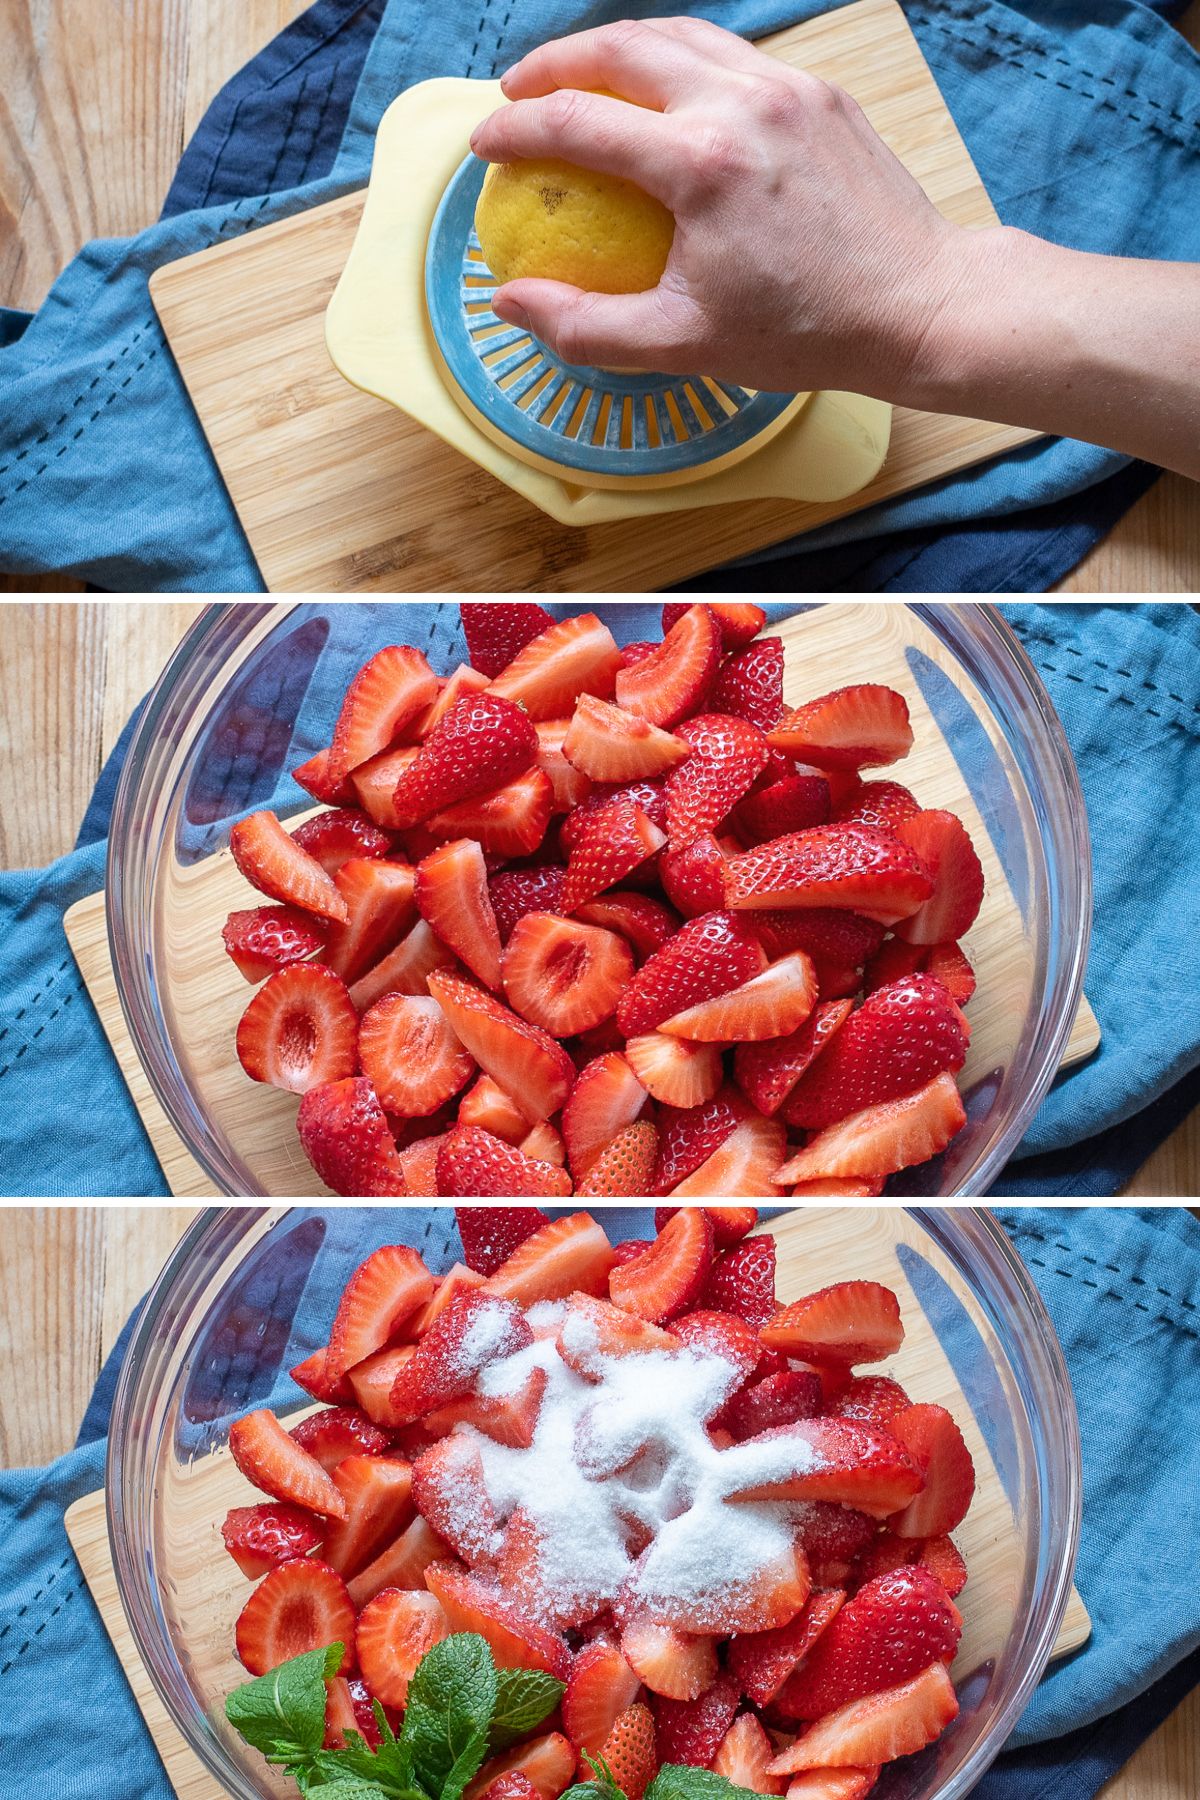 macerate the strawberries